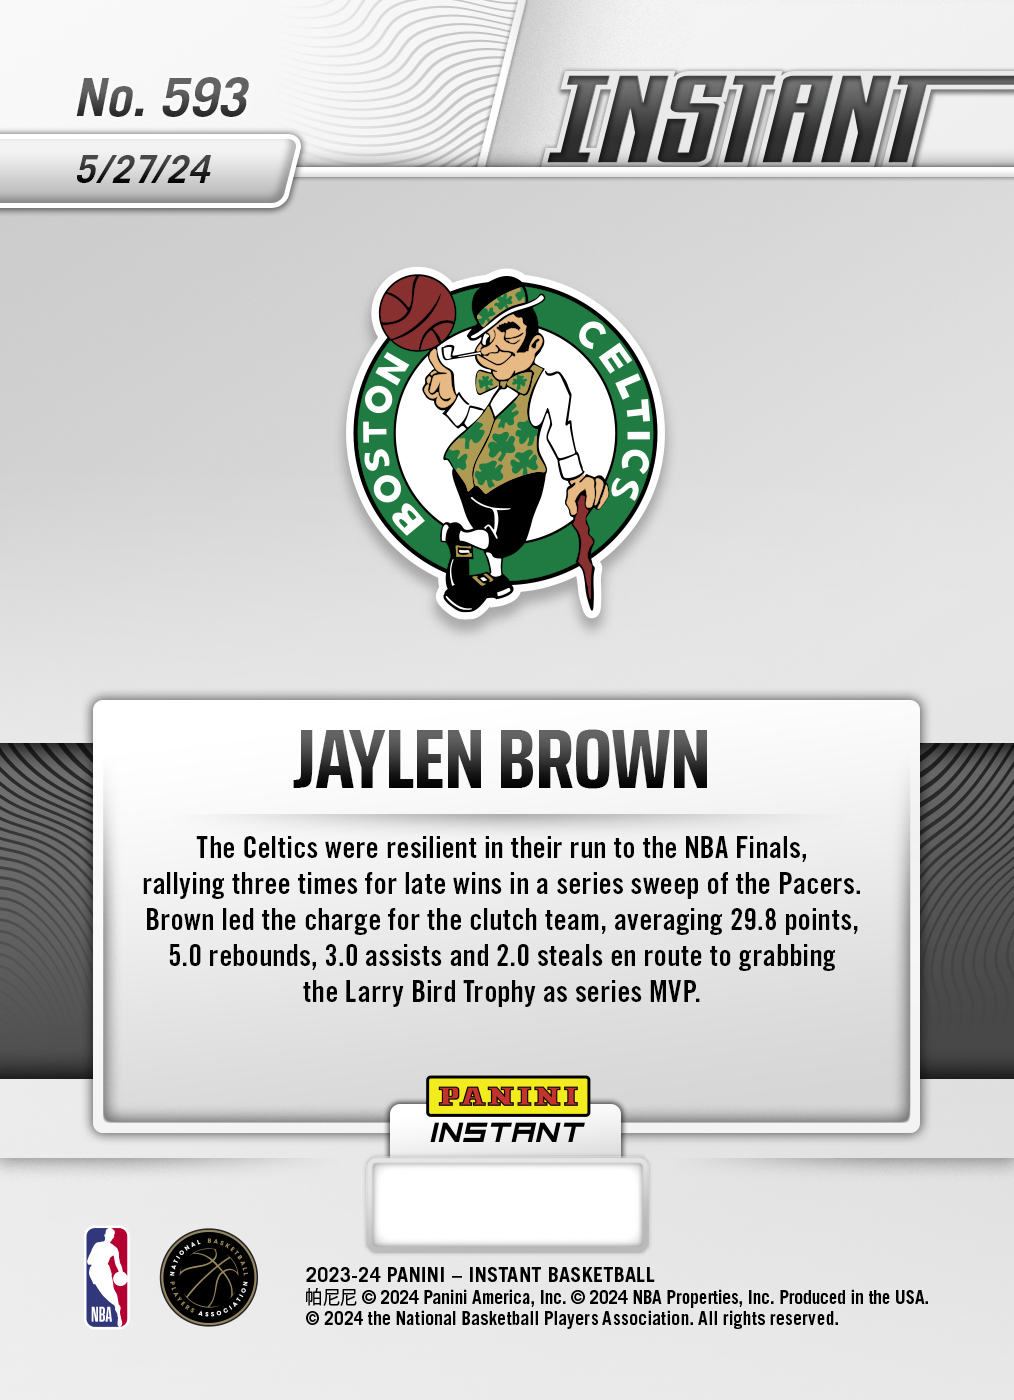 Jaylen Brown - 2023-24 Panini Instant NBA #593 - Base Card 25-pack